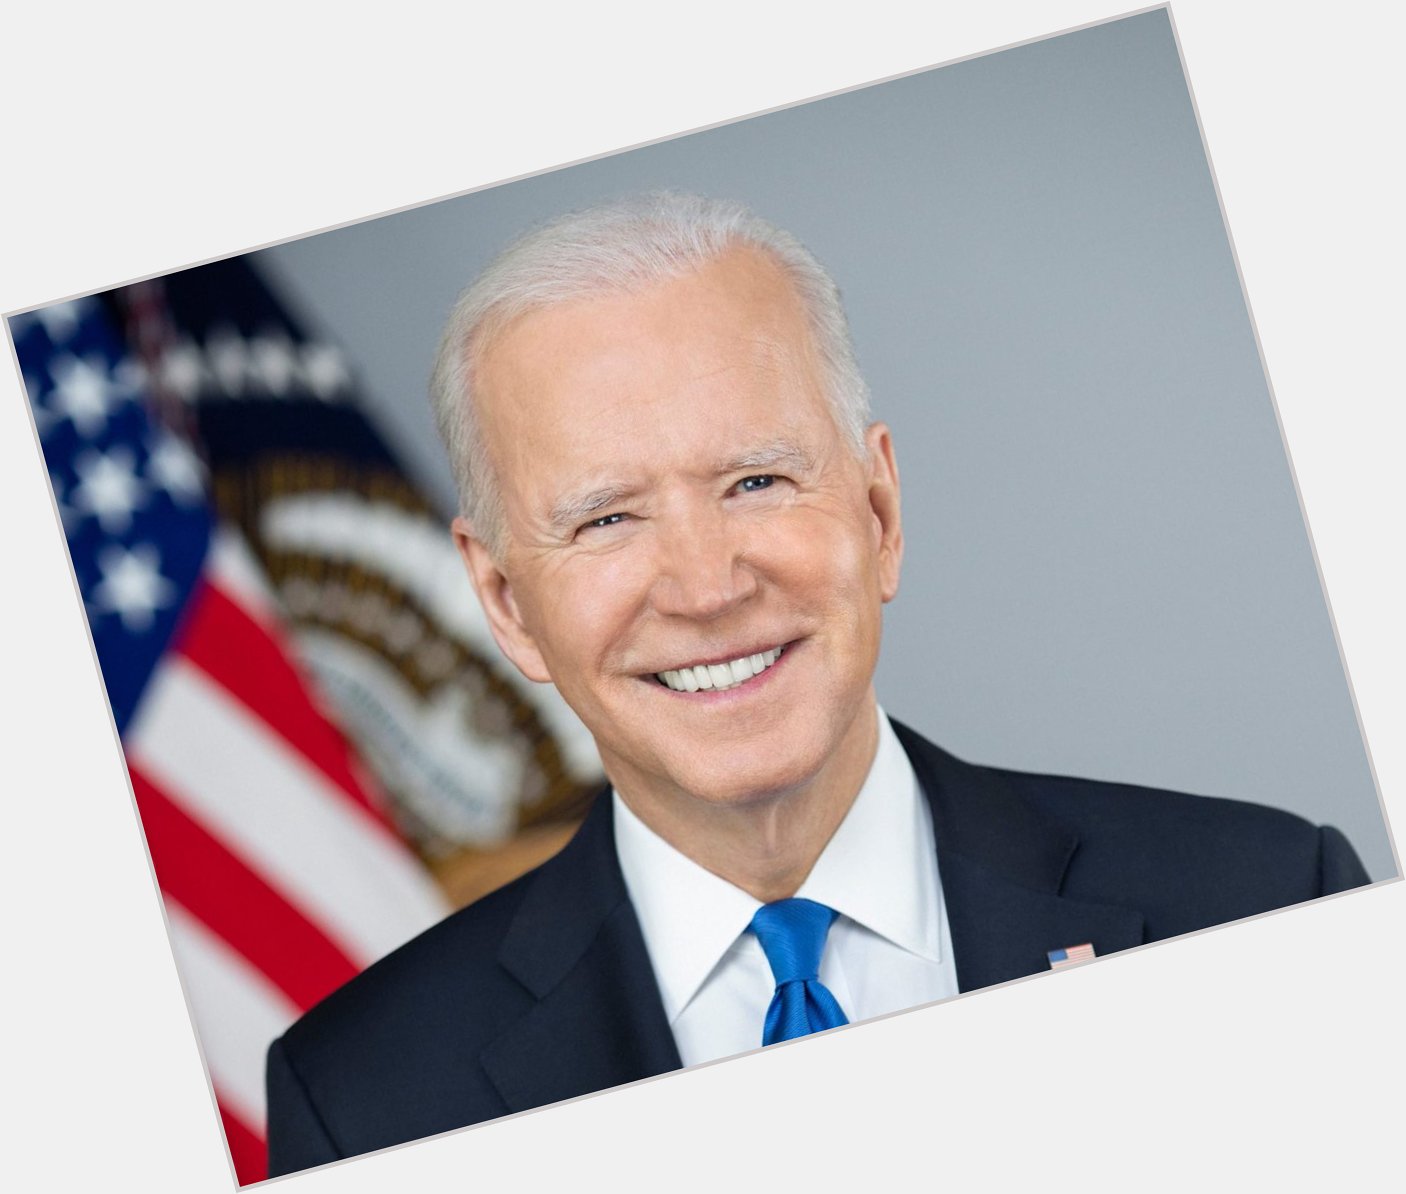 HAPPY BIRTHDAY to President Joe Biden, who turns 79 today! 